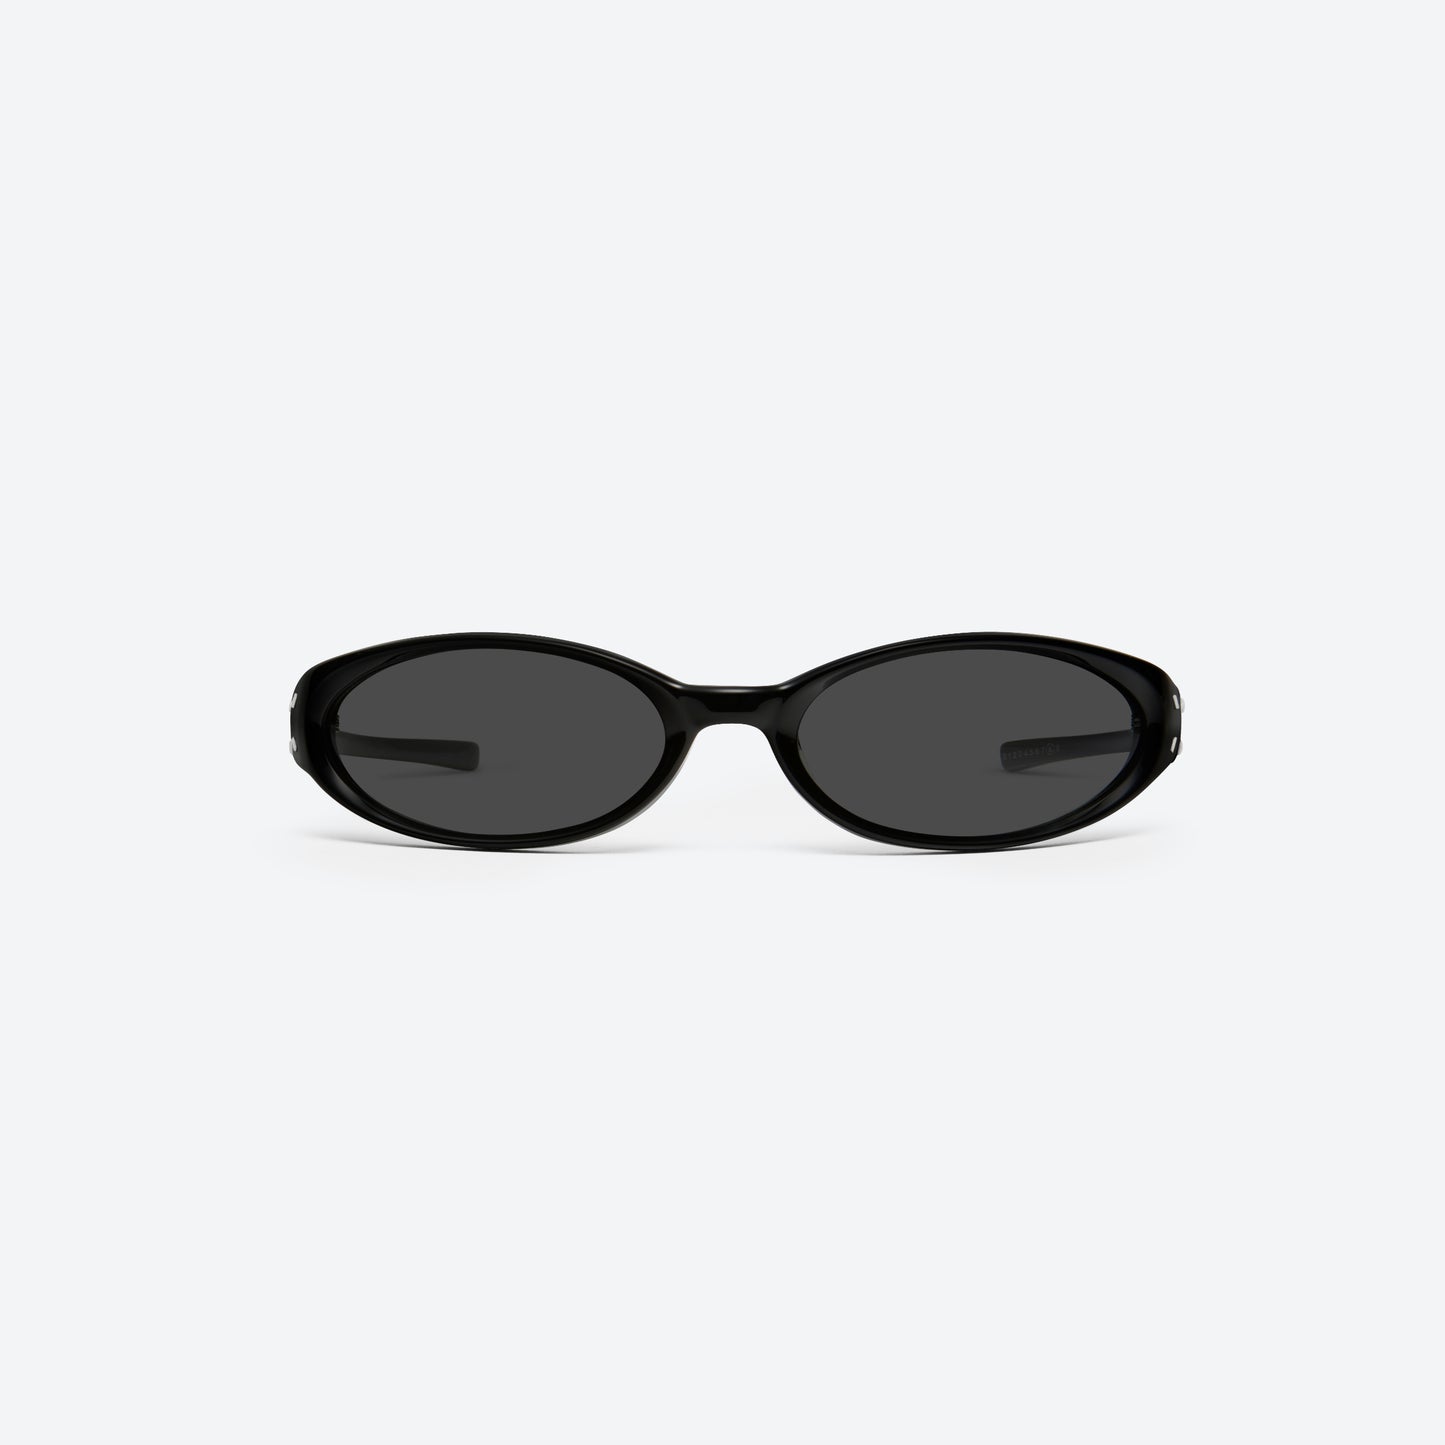 Maison Margiela x Gentle Monster Sunglasses MM104 01